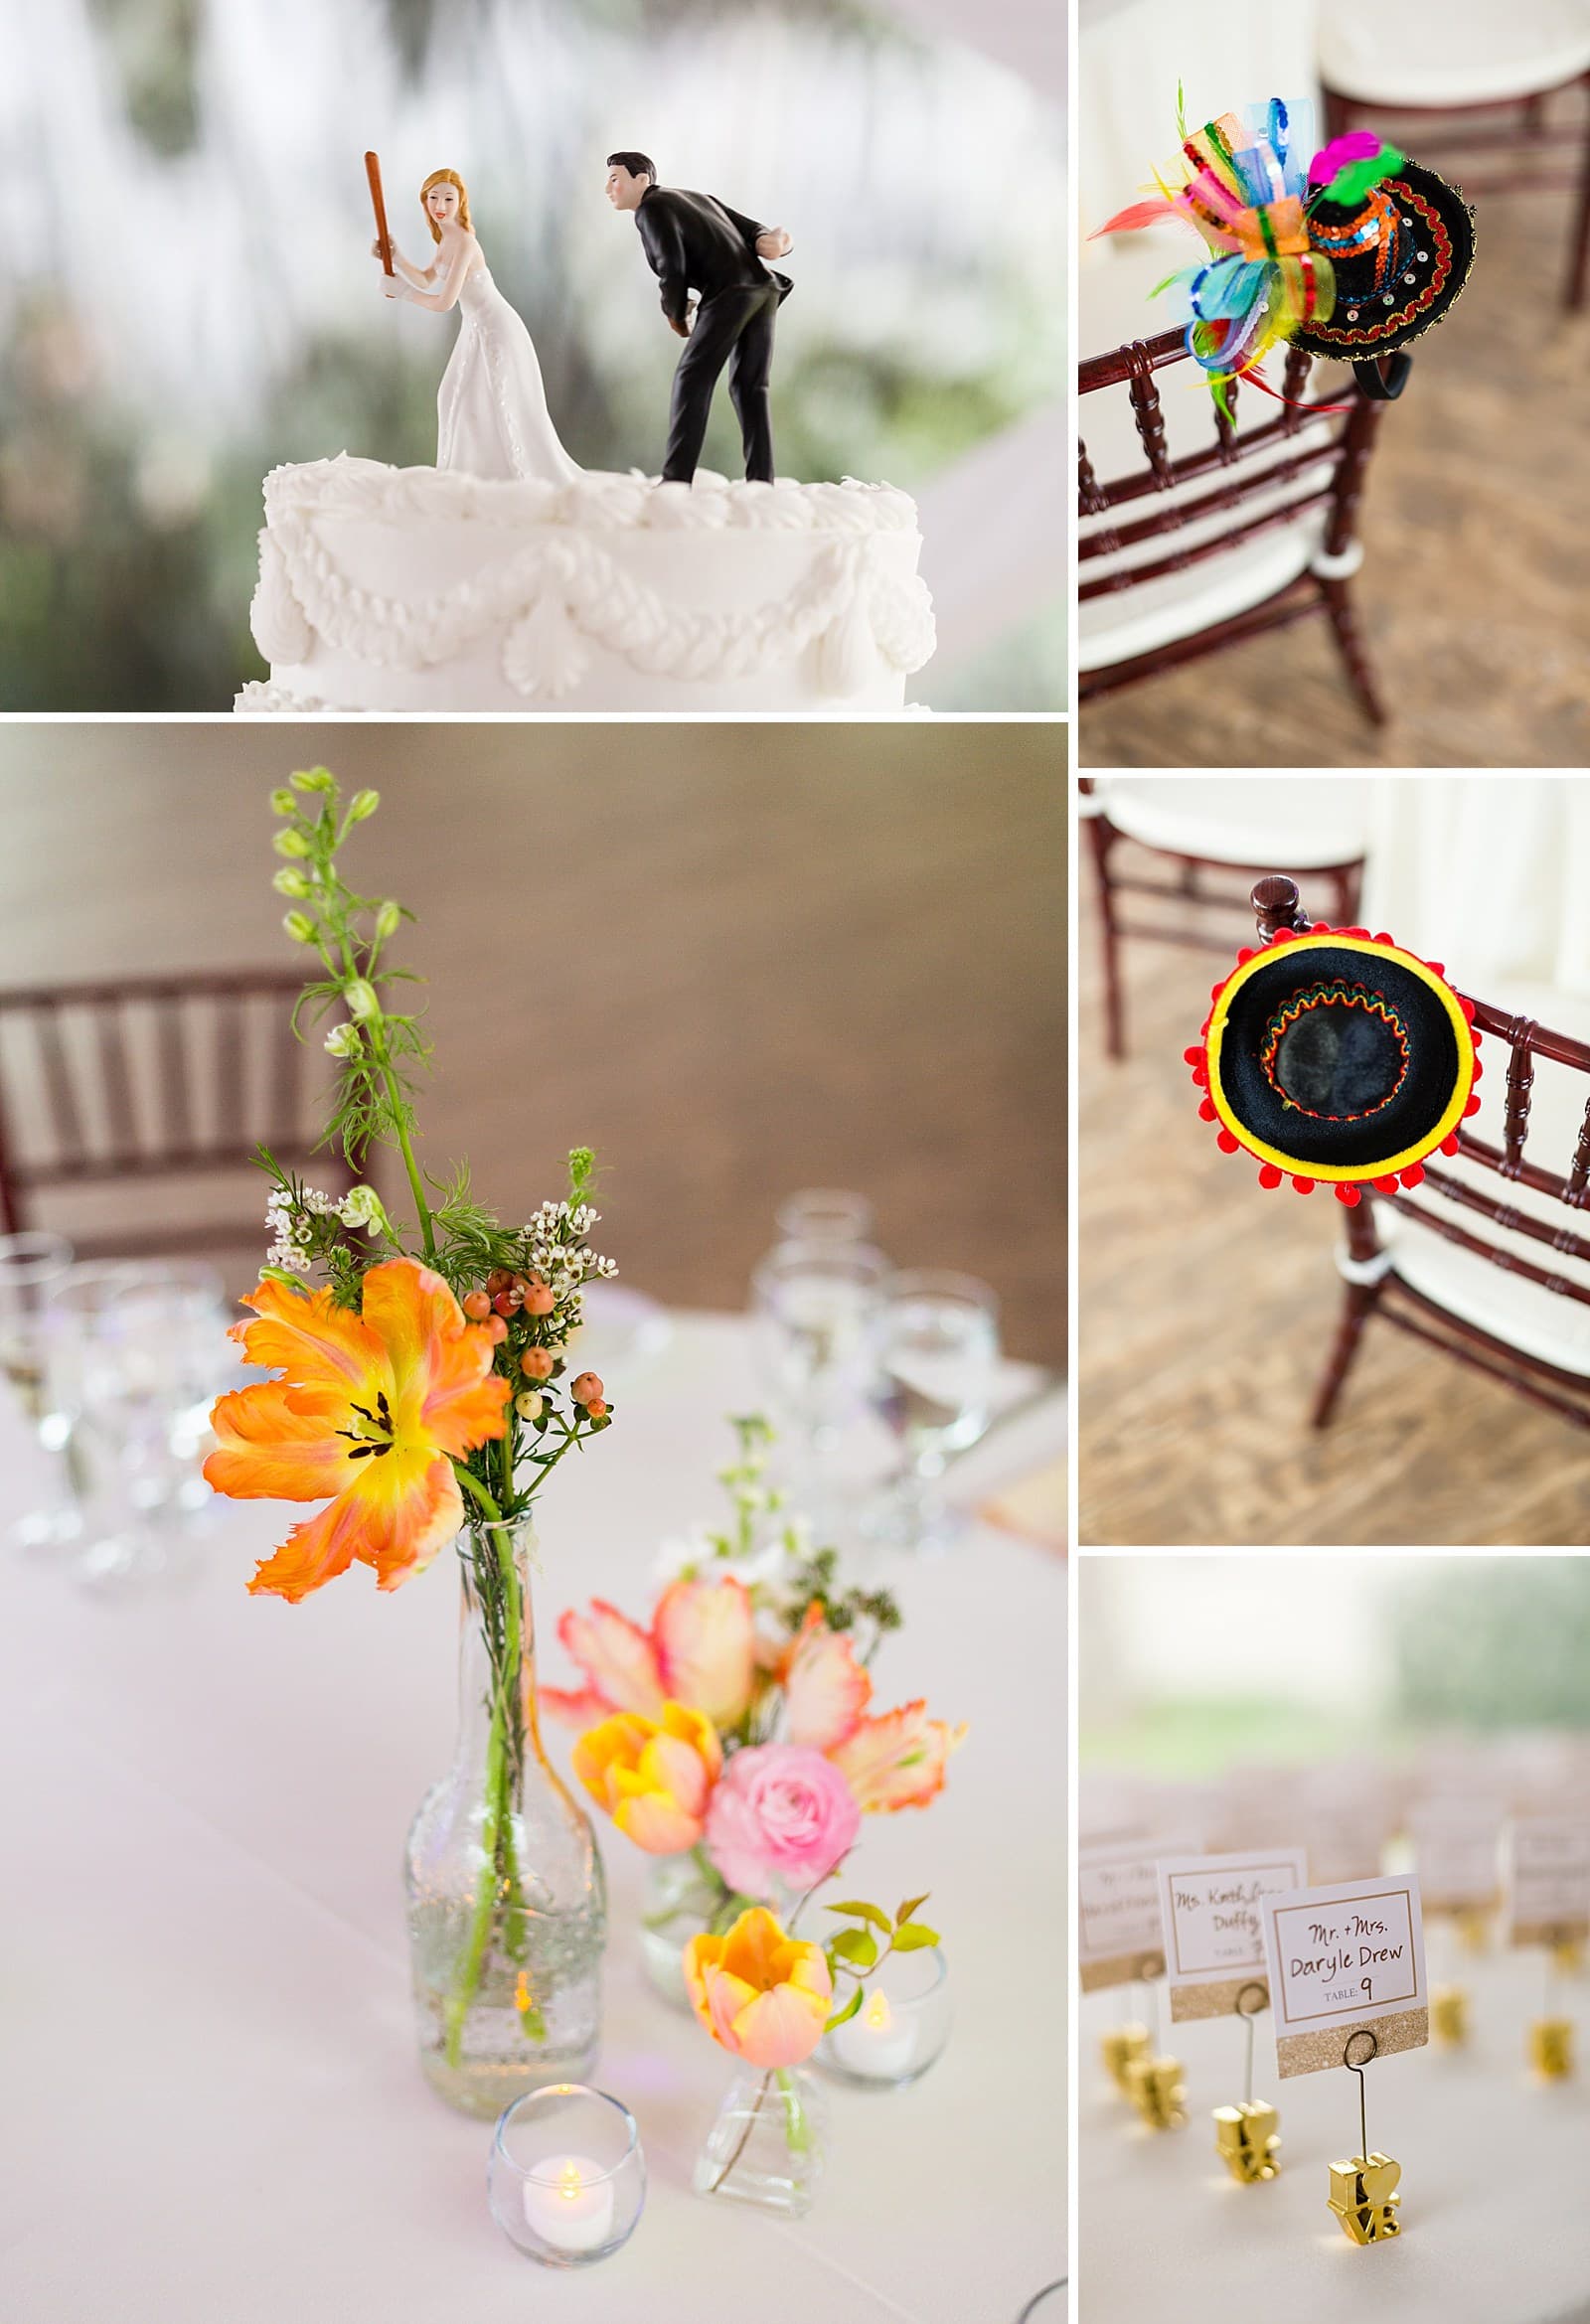 Wedding cake toppers details, chair details, floral centerpieces, place card sign details